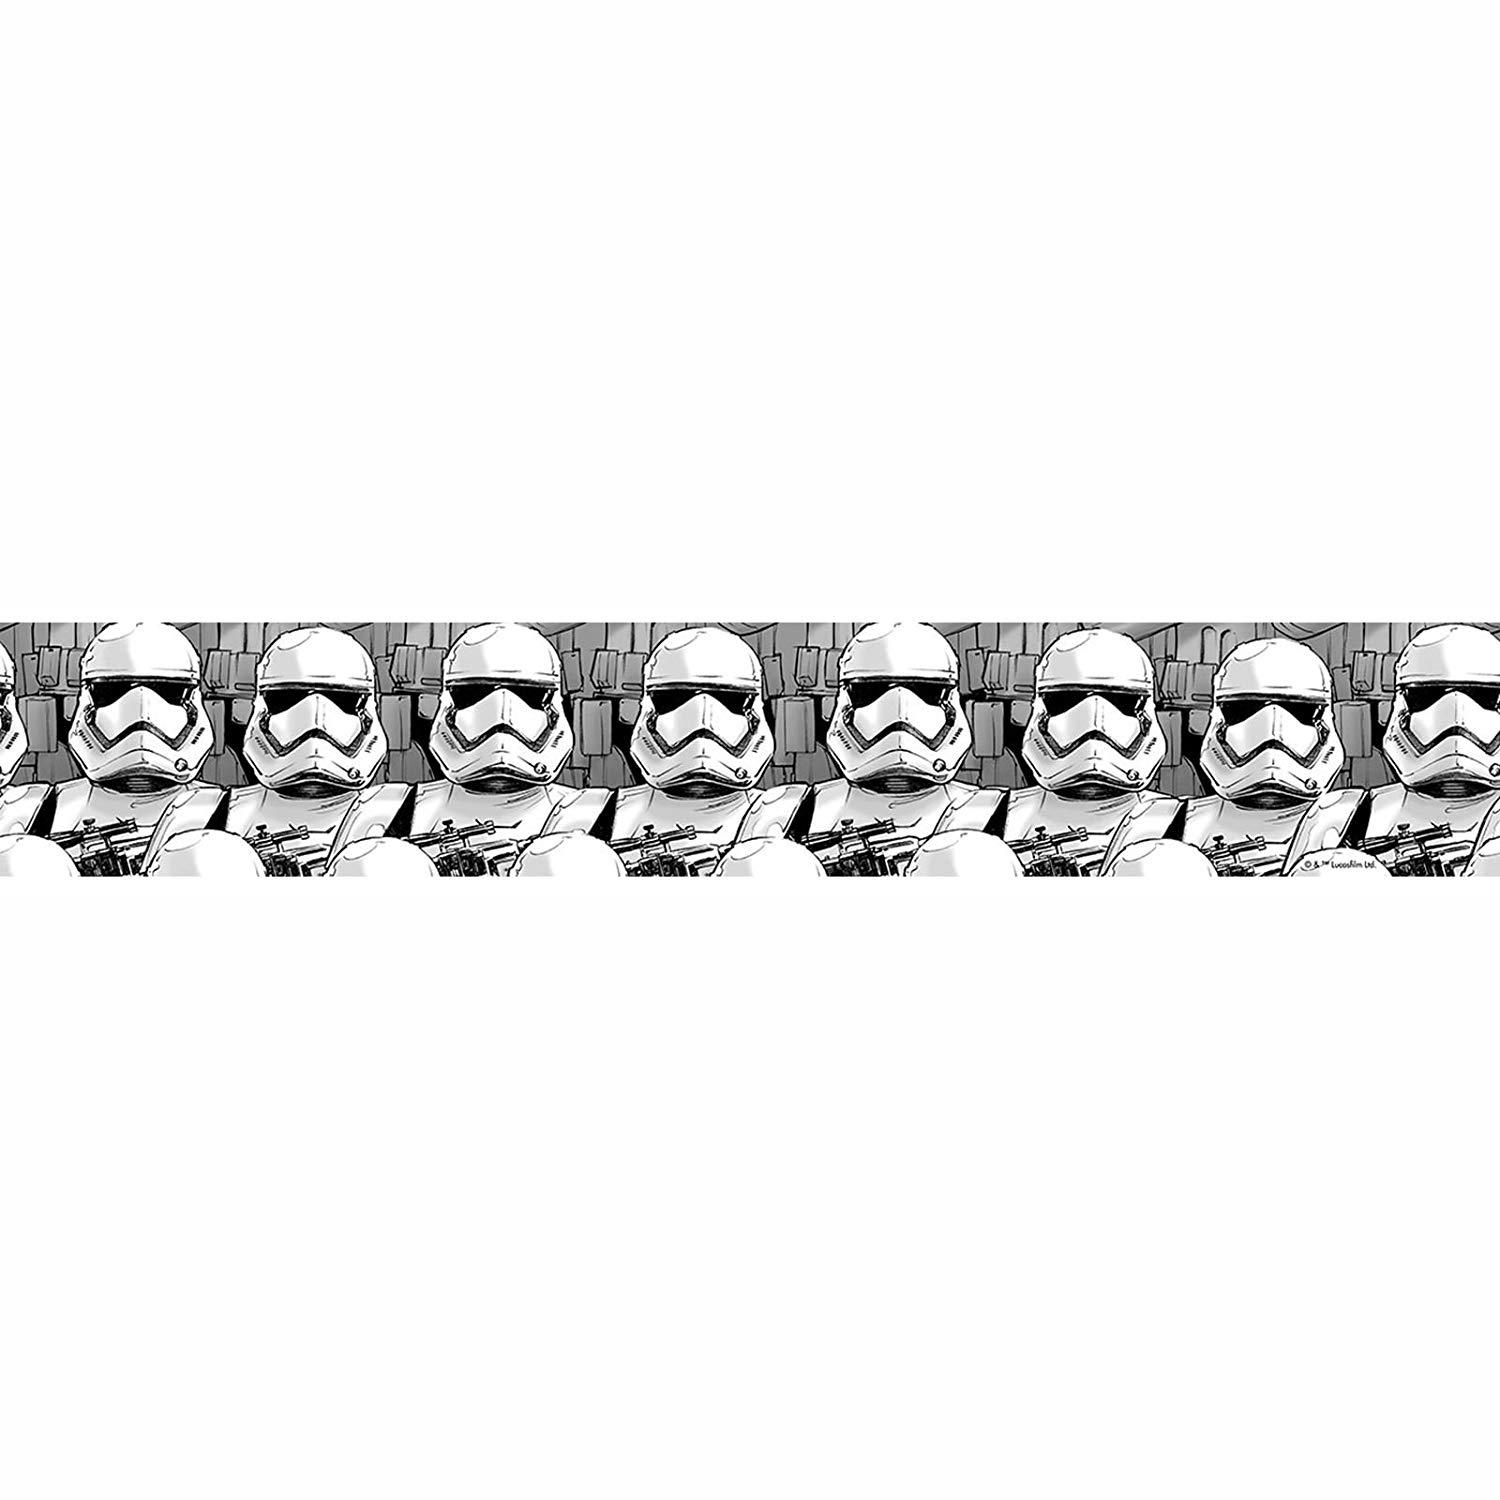 Star Wars Stormtrooper Self Adhesive Wallpaper Border - Star Wars Borders , HD Wallpaper & Backgrounds